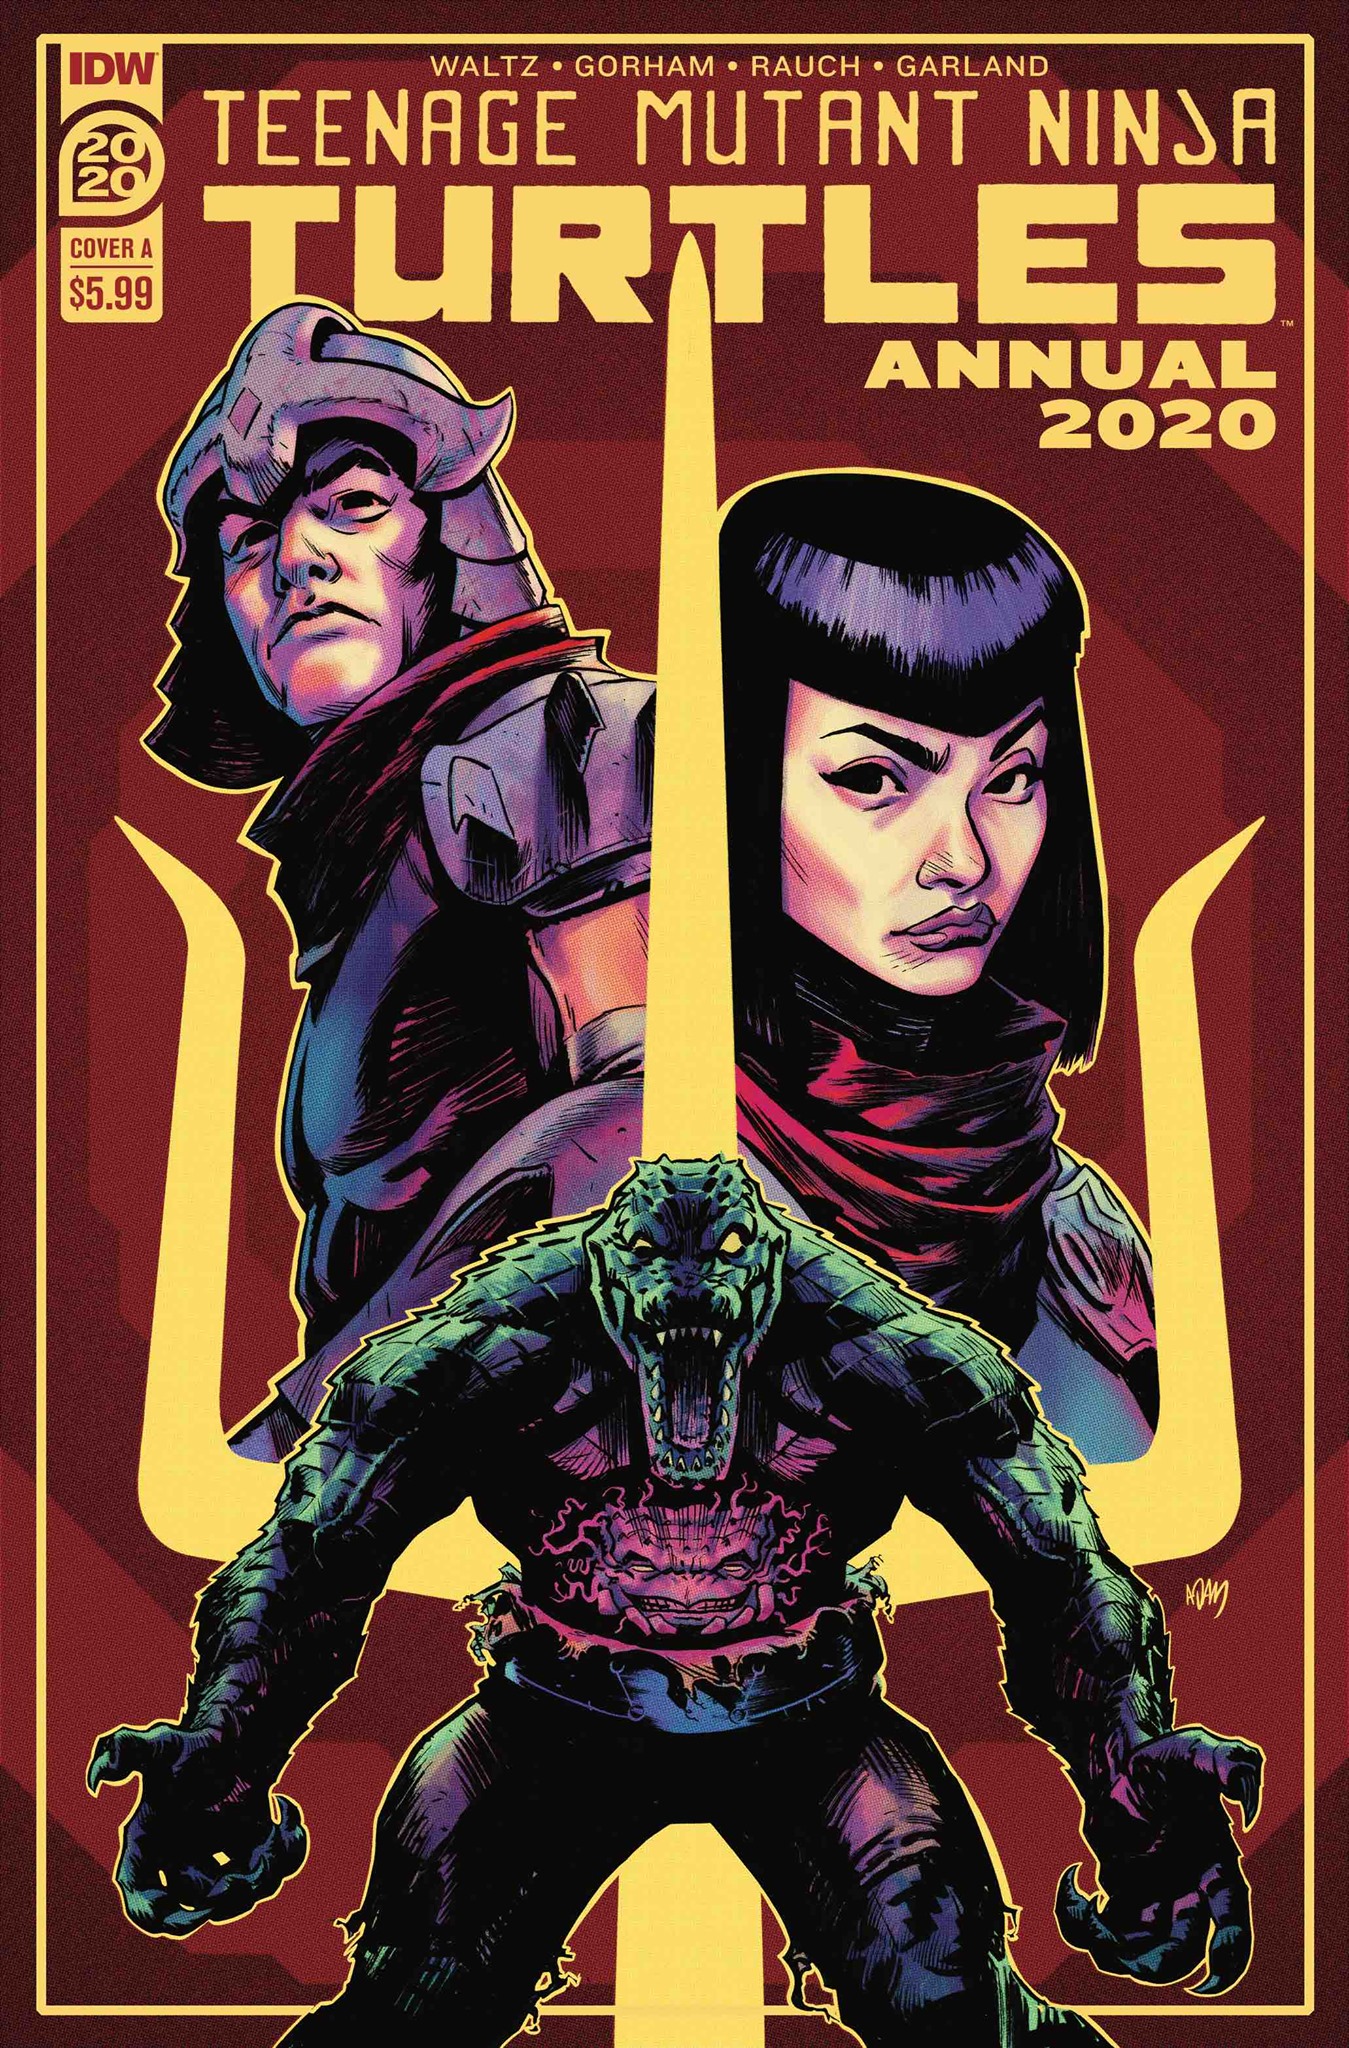 Teenage Mutant Ninja Turtles Annual 2020 #1 Cover A Gorham